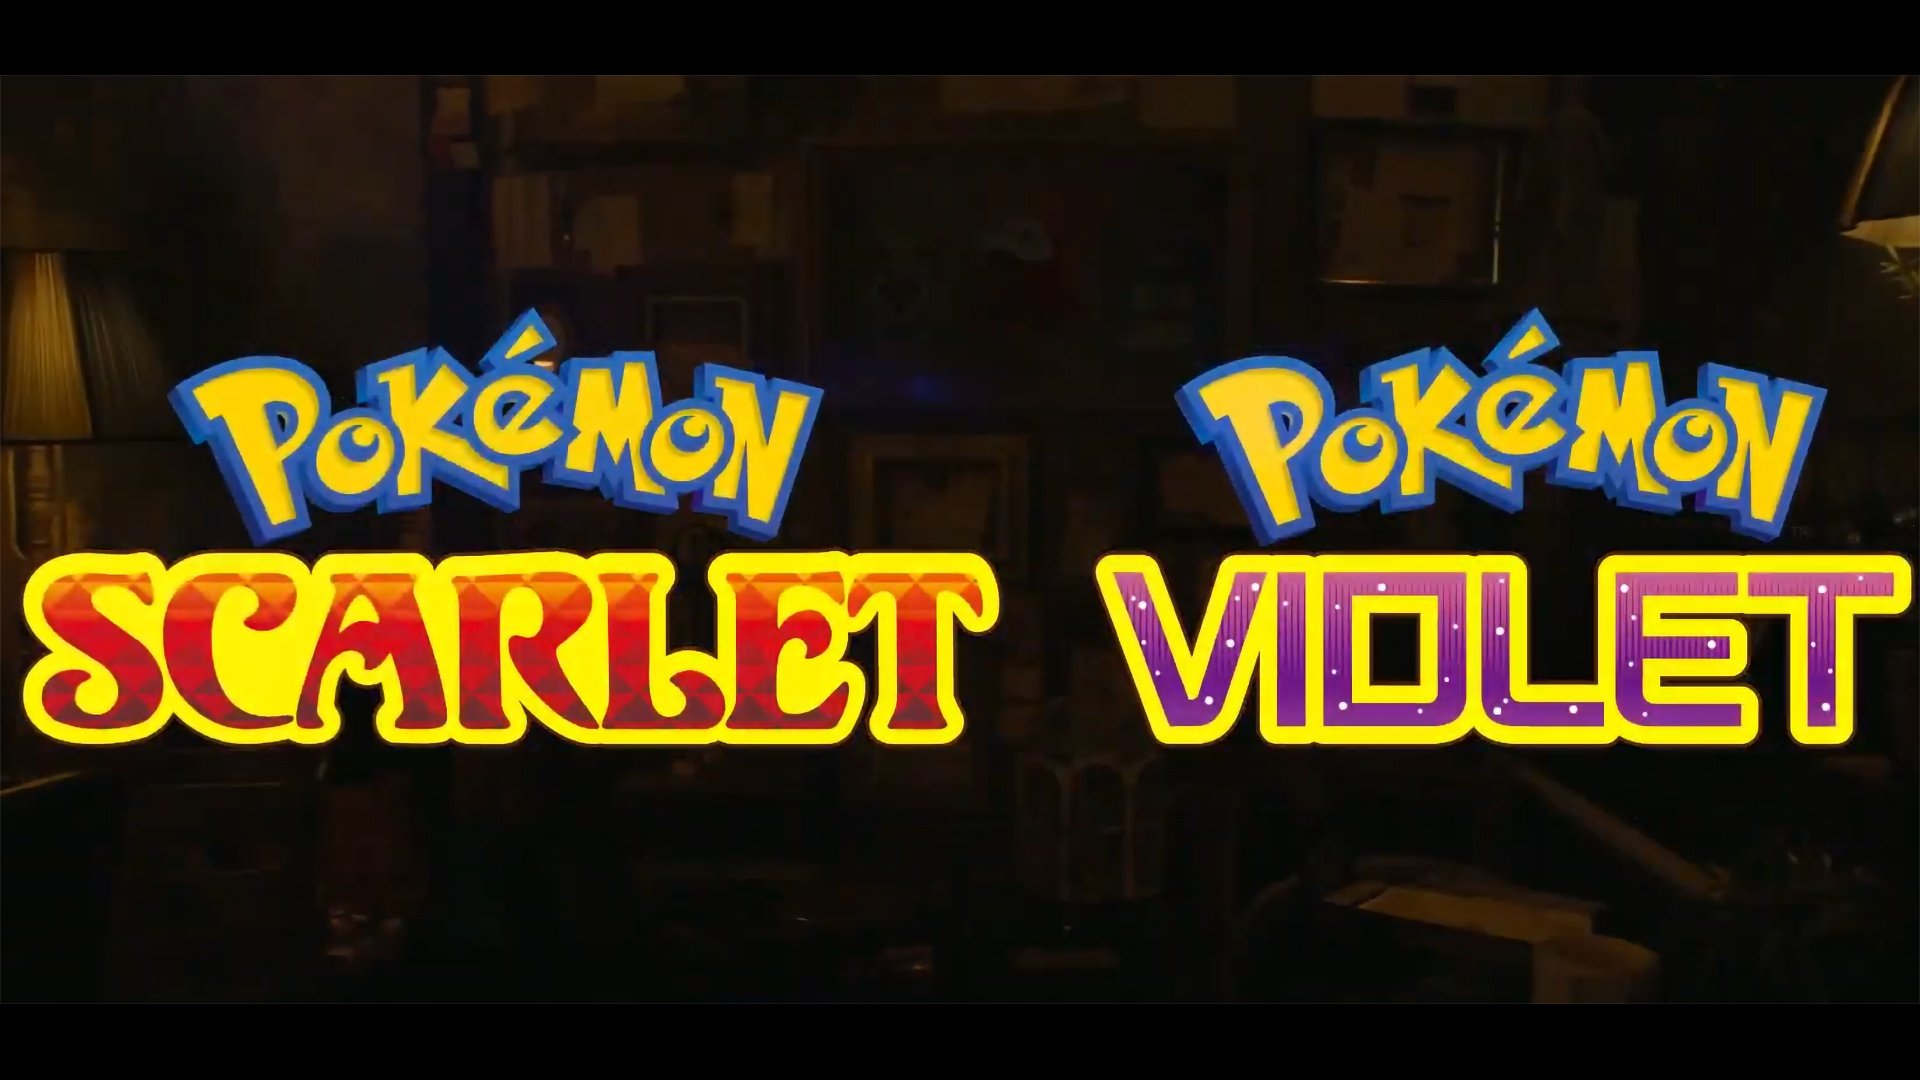 Pokemon Scarlet and Violet logo appear against a black background